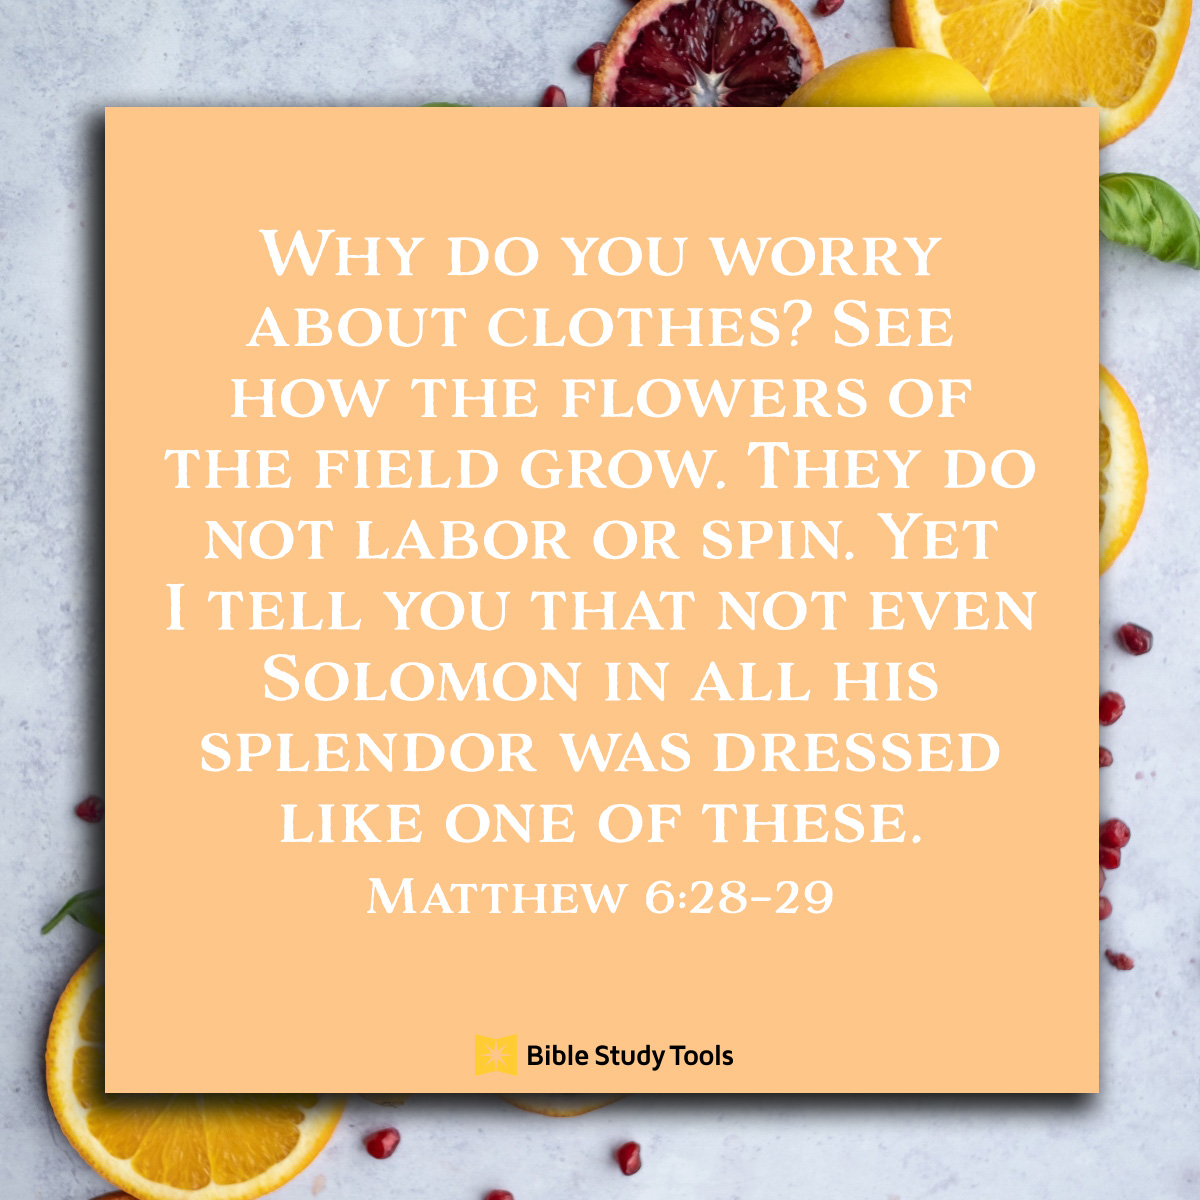 Matthew 6:28-29, inspirational image